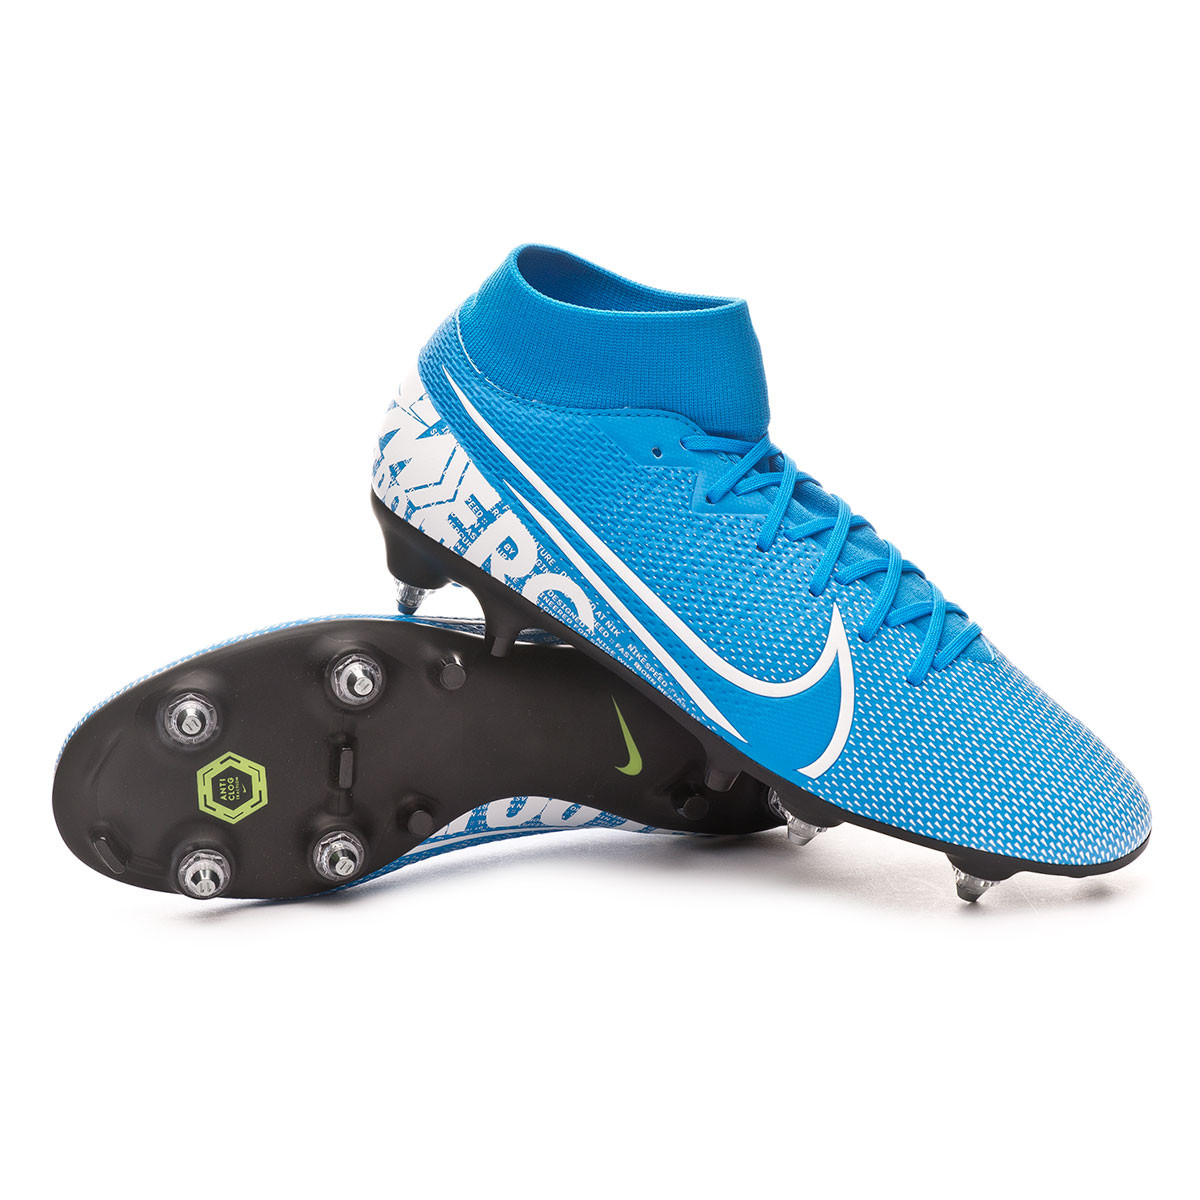 Nike Superflyx 6 Academy Turf Cleat Soccer Amazon.com